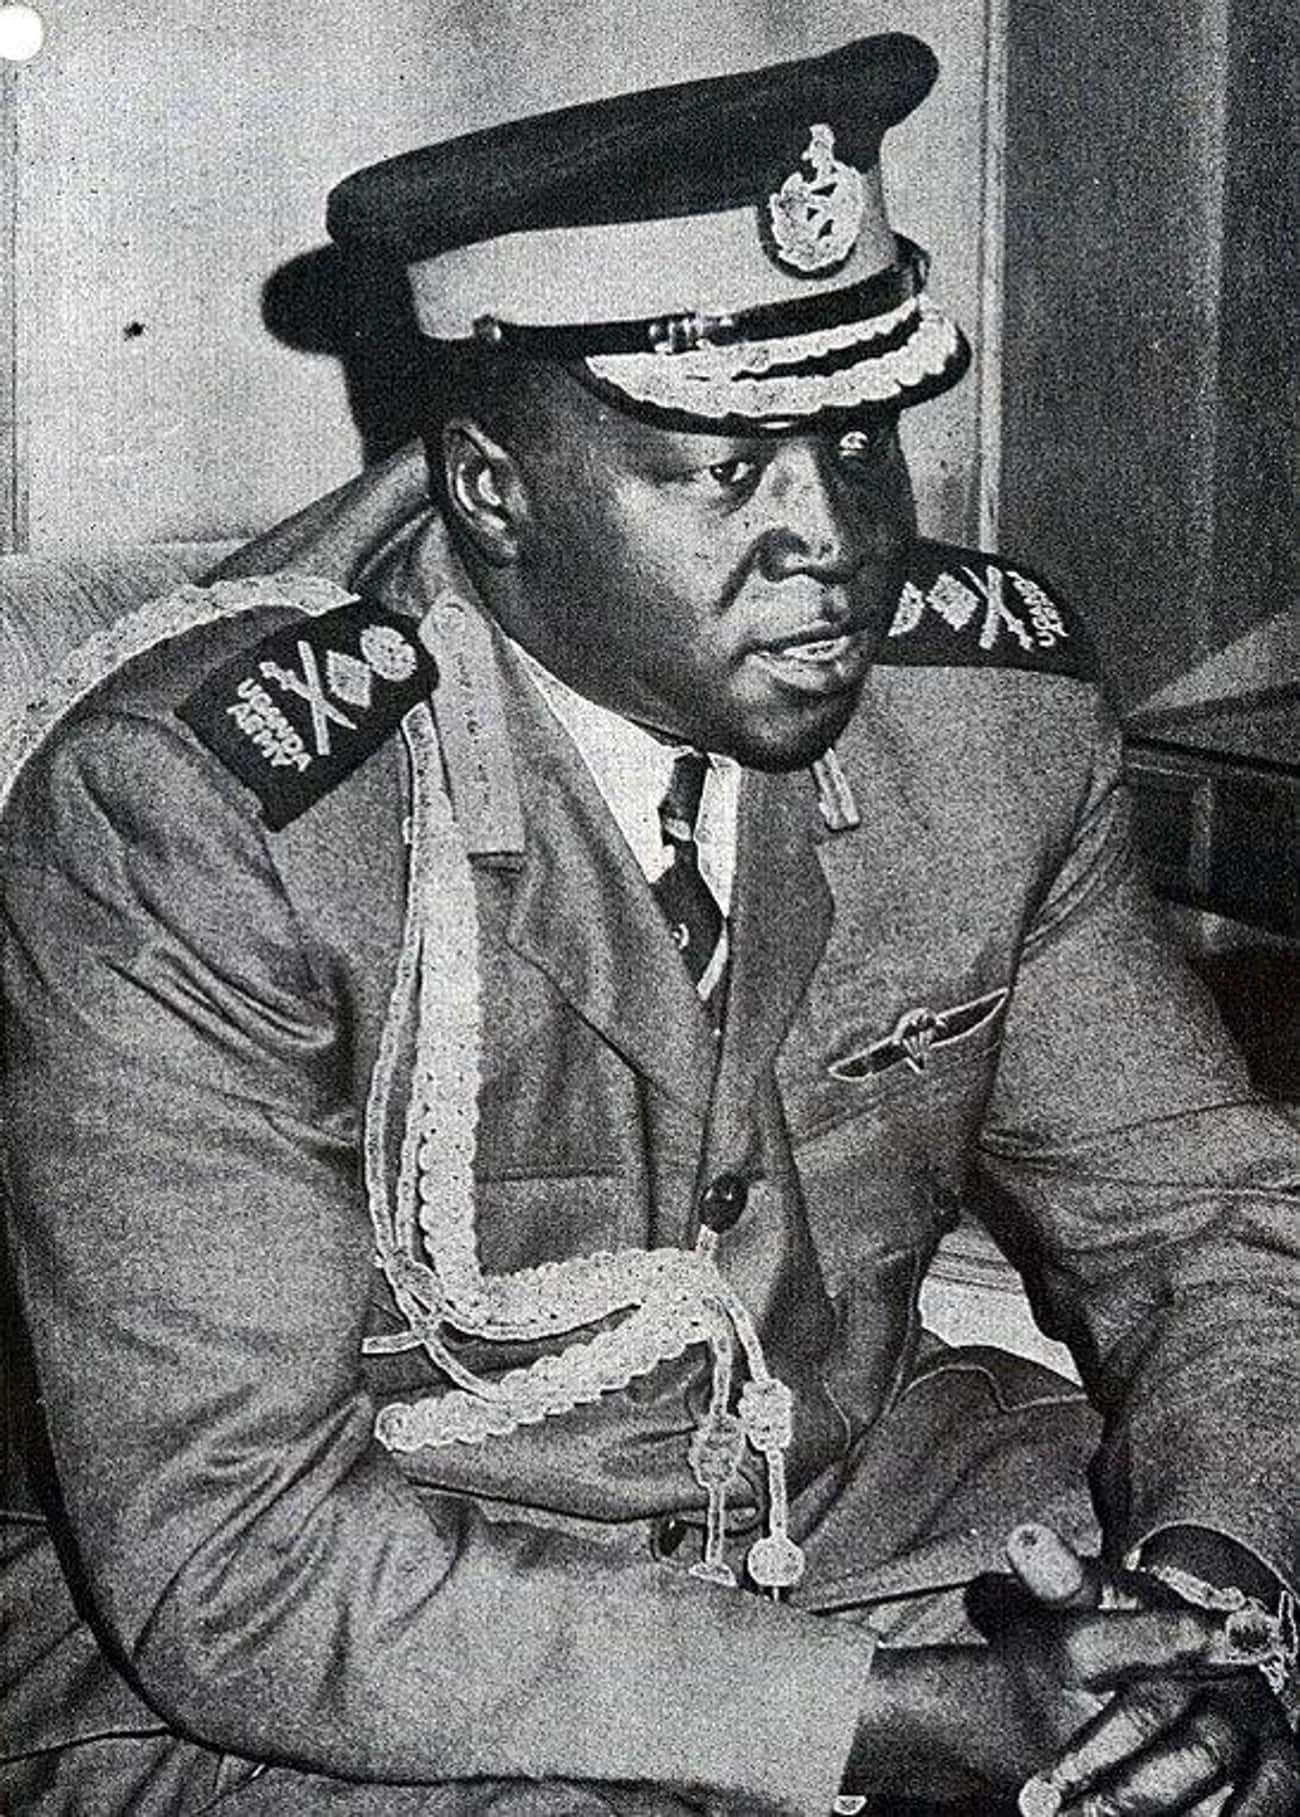 1971: Brutal Leader Idi Amin Seized Power In Uganda